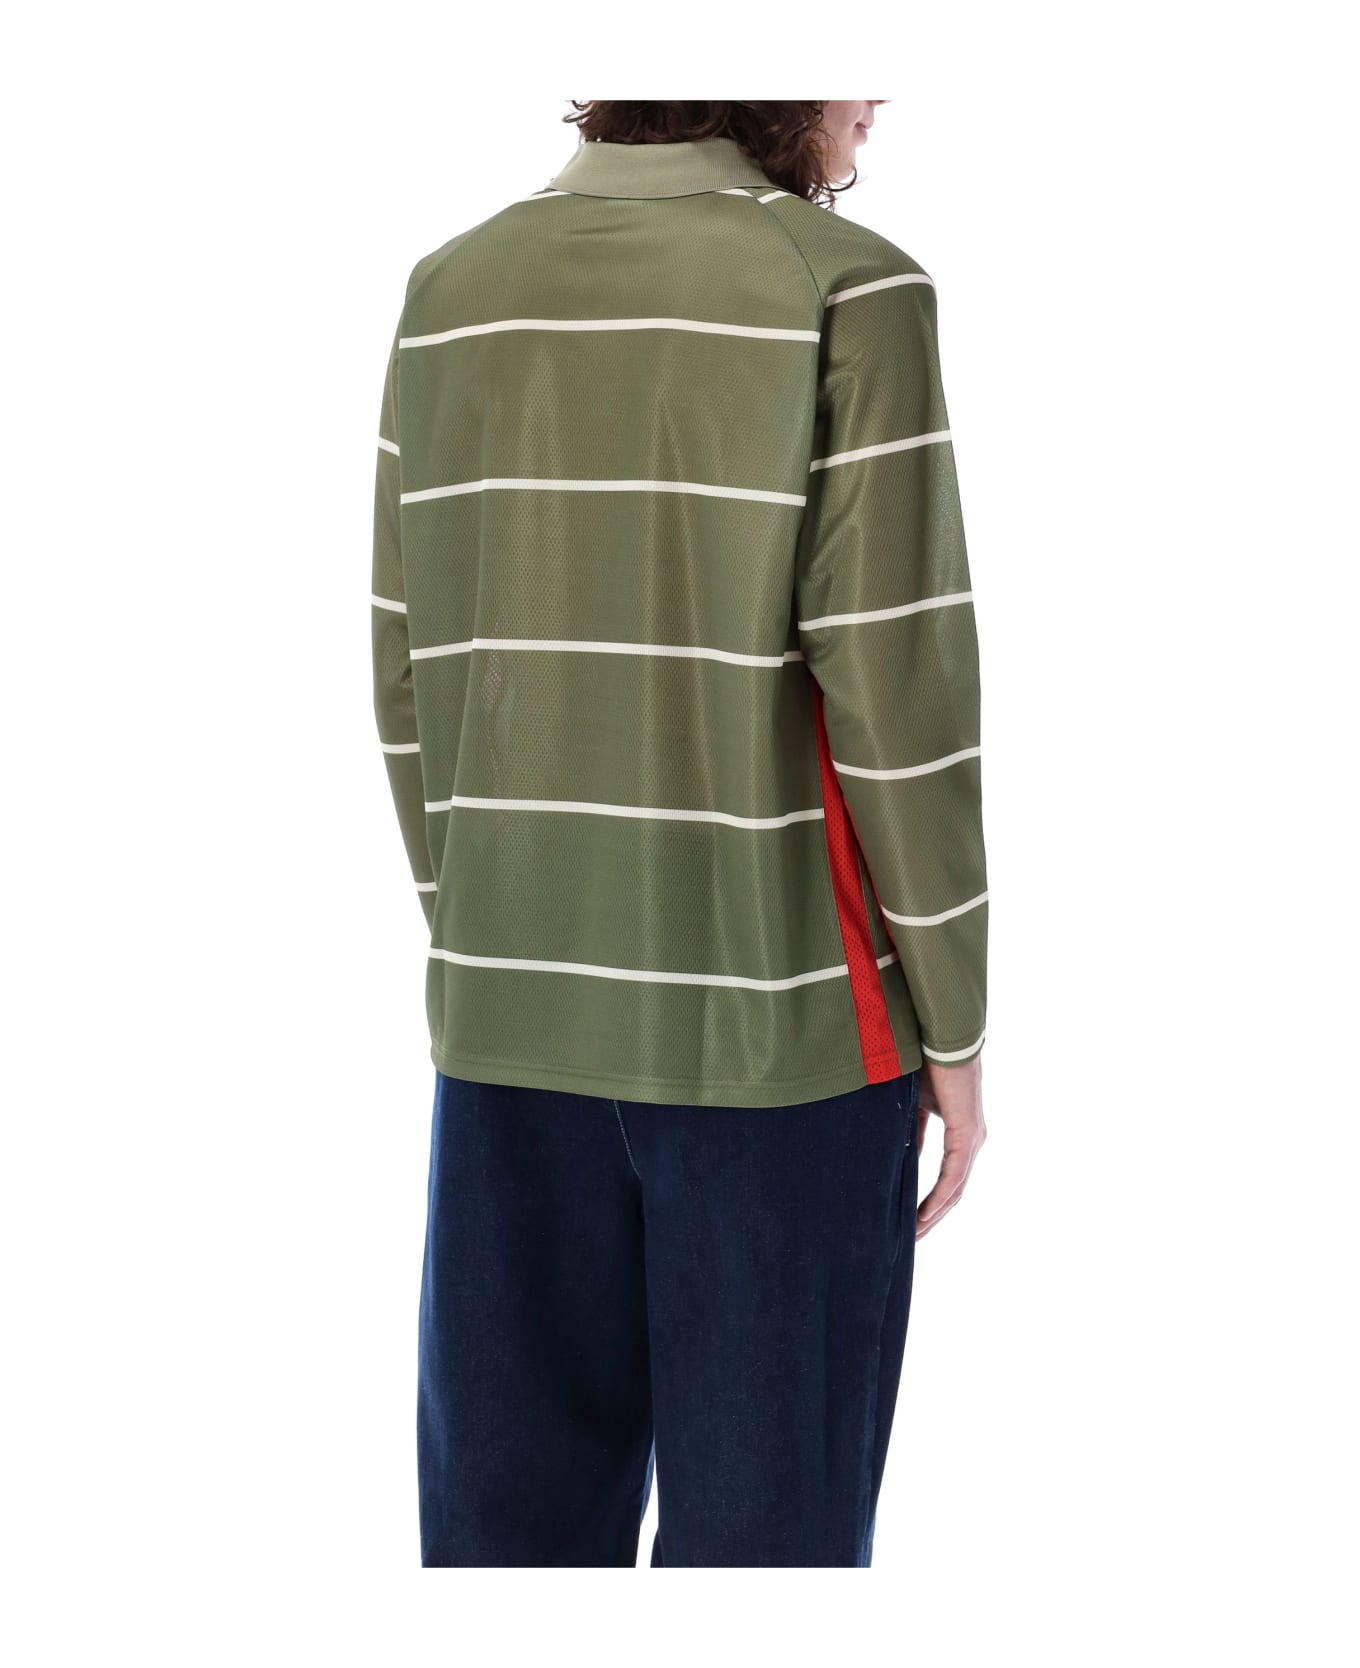 Pop Trading Company Pop Striped Sportif Long Sleeves T-shirt - LODEN GREEN フリース